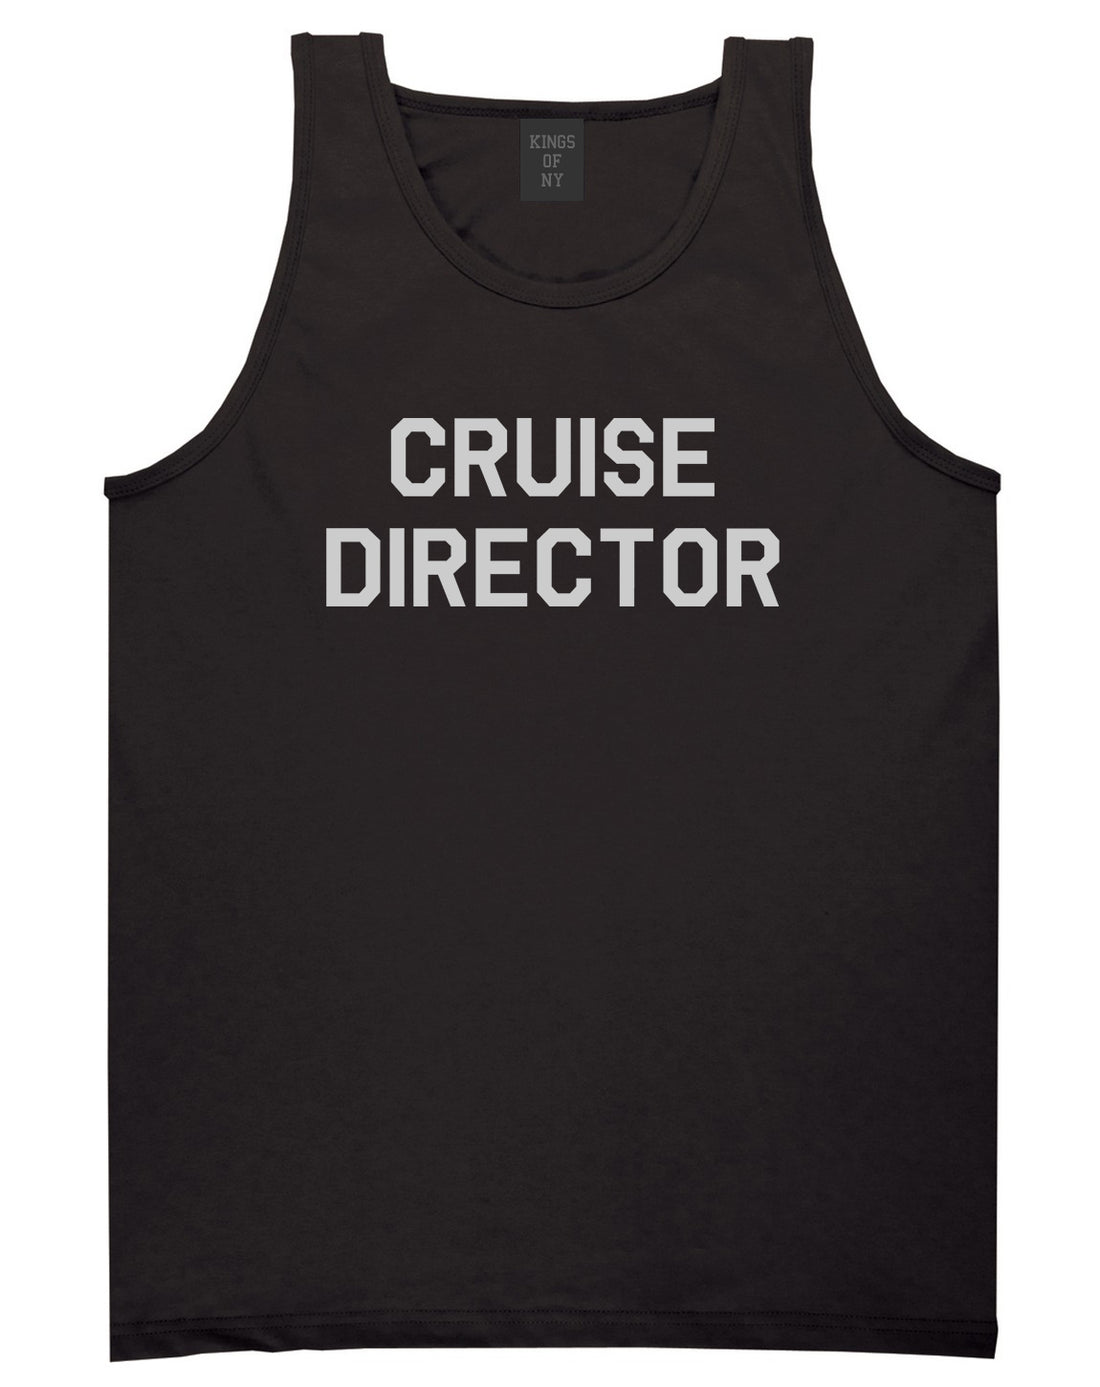 Cruise_Director Mens Black Tank Top Shirt by Kings Of NY